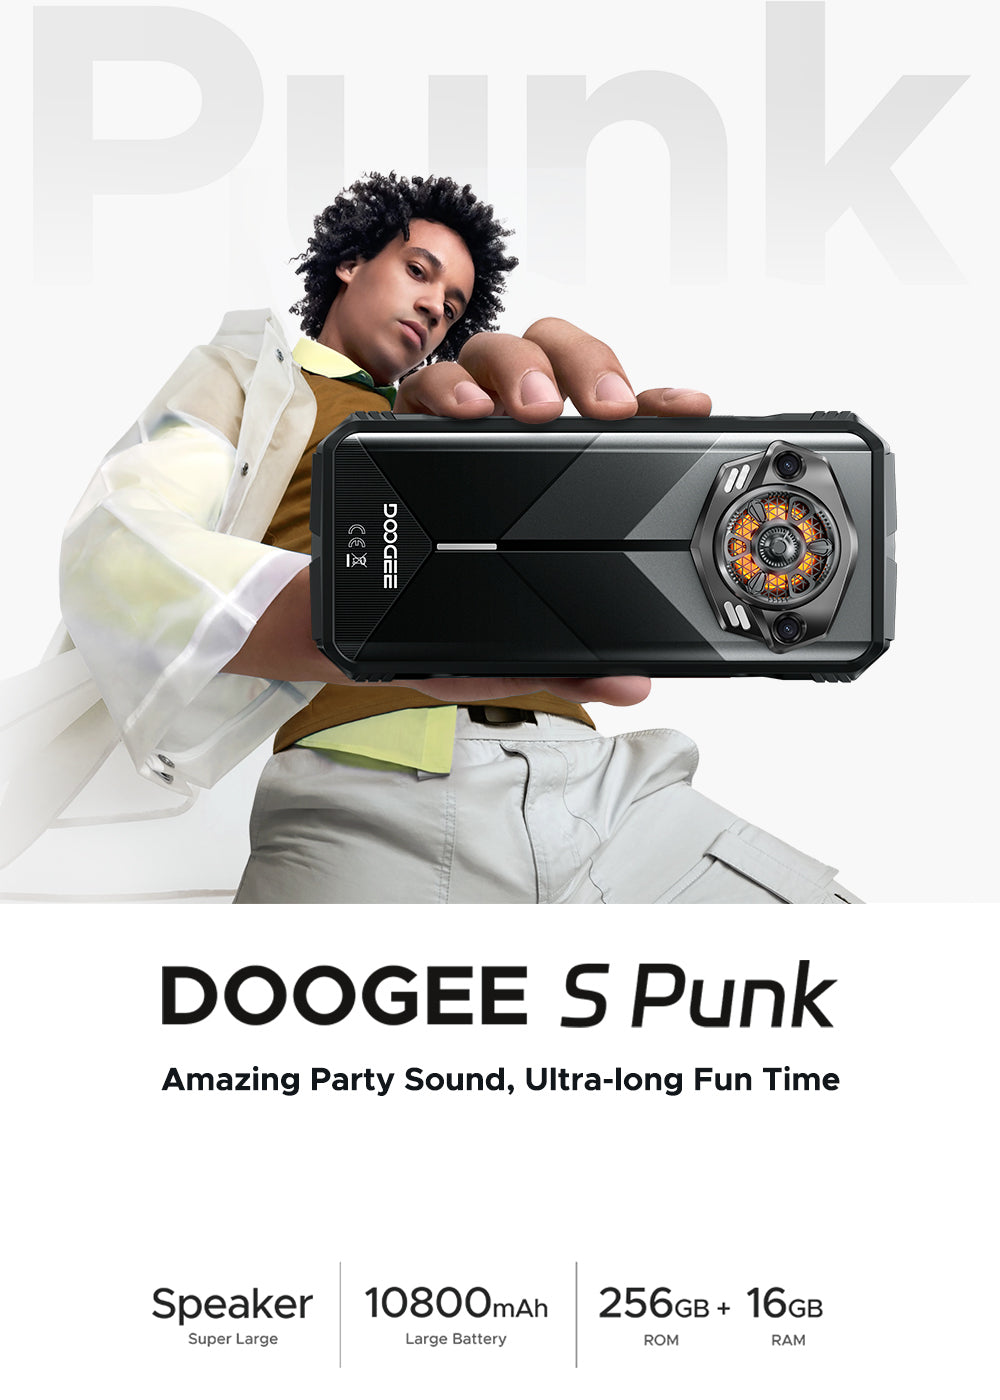 DOOGEE S punk Rugged Phone Coming Soon